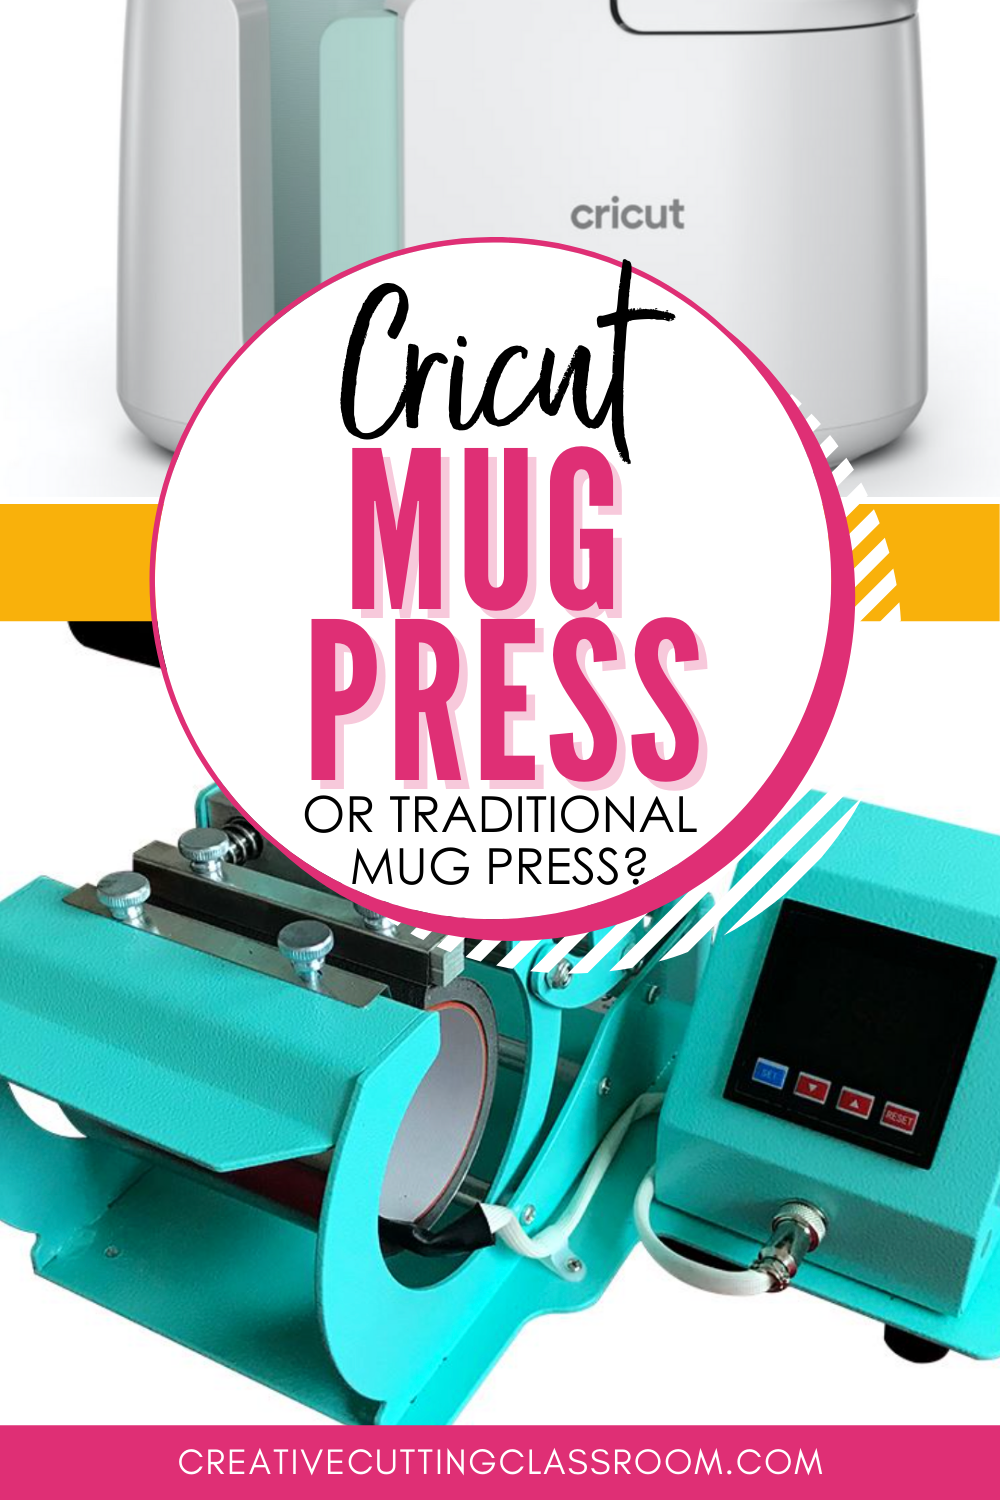 📦Unboxing: Cricut Mug Press and Comparison to Other Mug Presses 